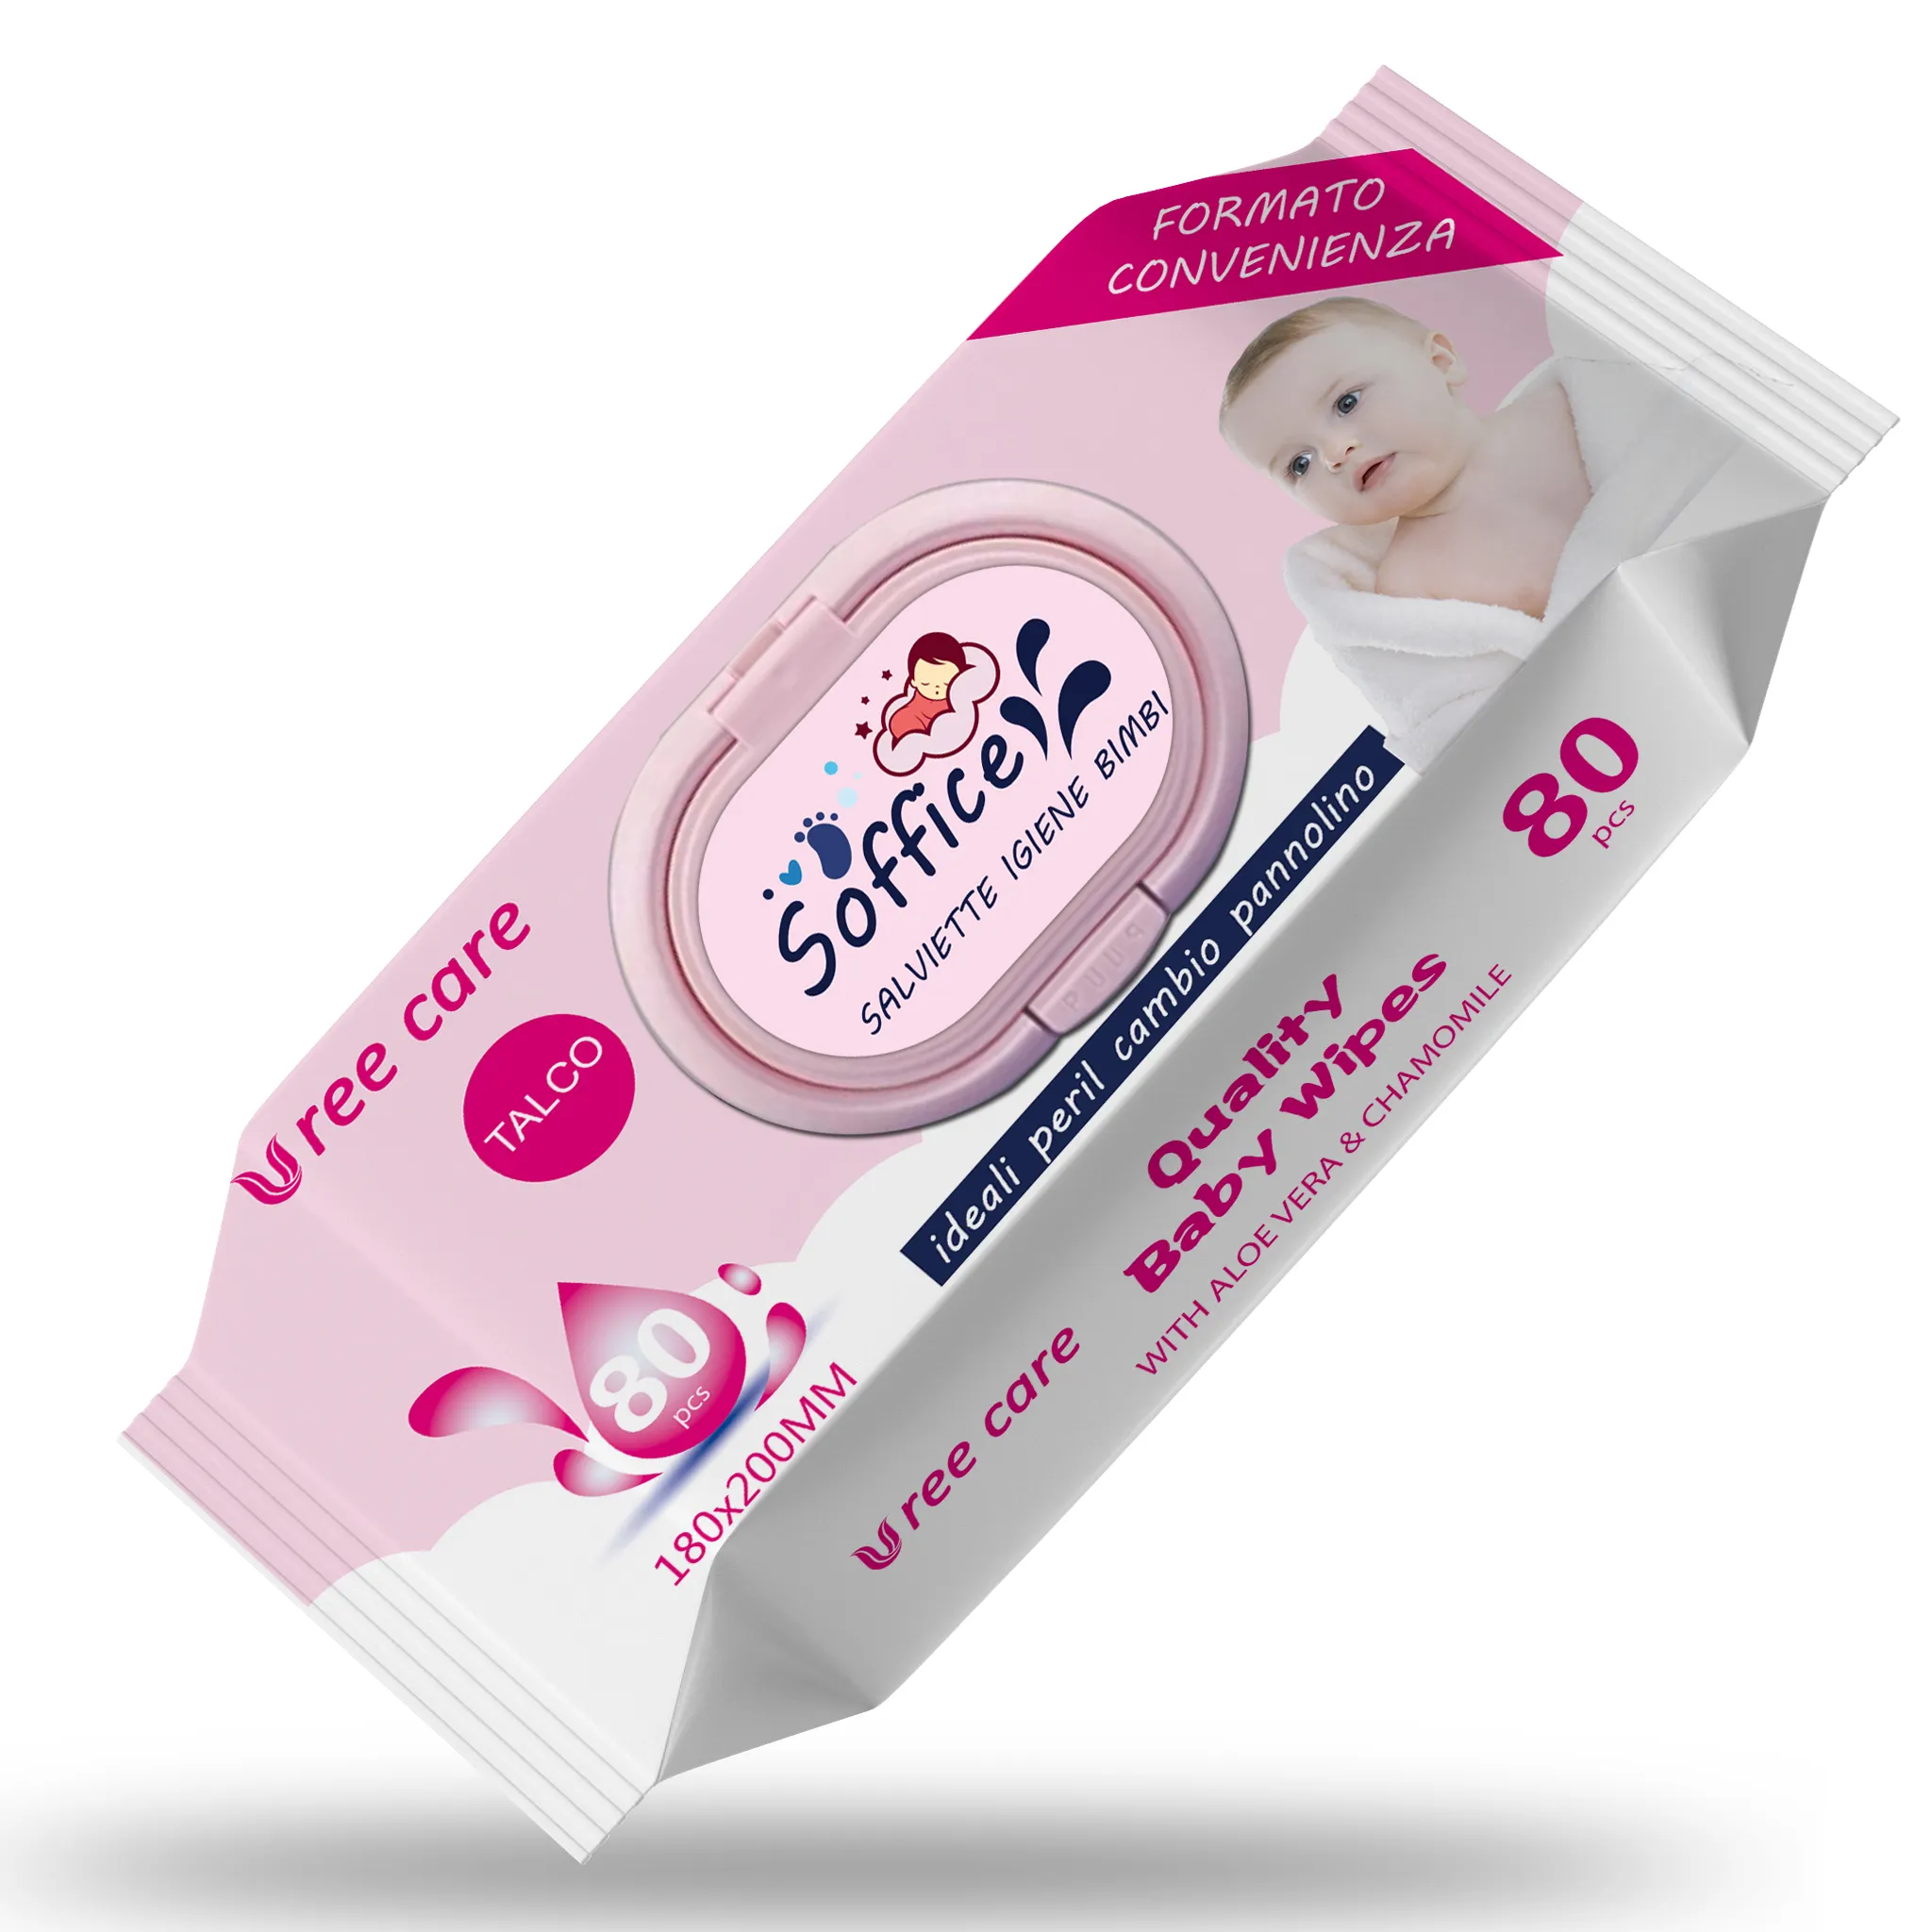 लोकप्रिय मुलायम शिशु त्वचा देखभाल अल्कोहल मुक्त निजी लेबल ओईएम वेट वाइप्स हाथ मुंह साफ सफाई वाइप्स बच्चे के लिए